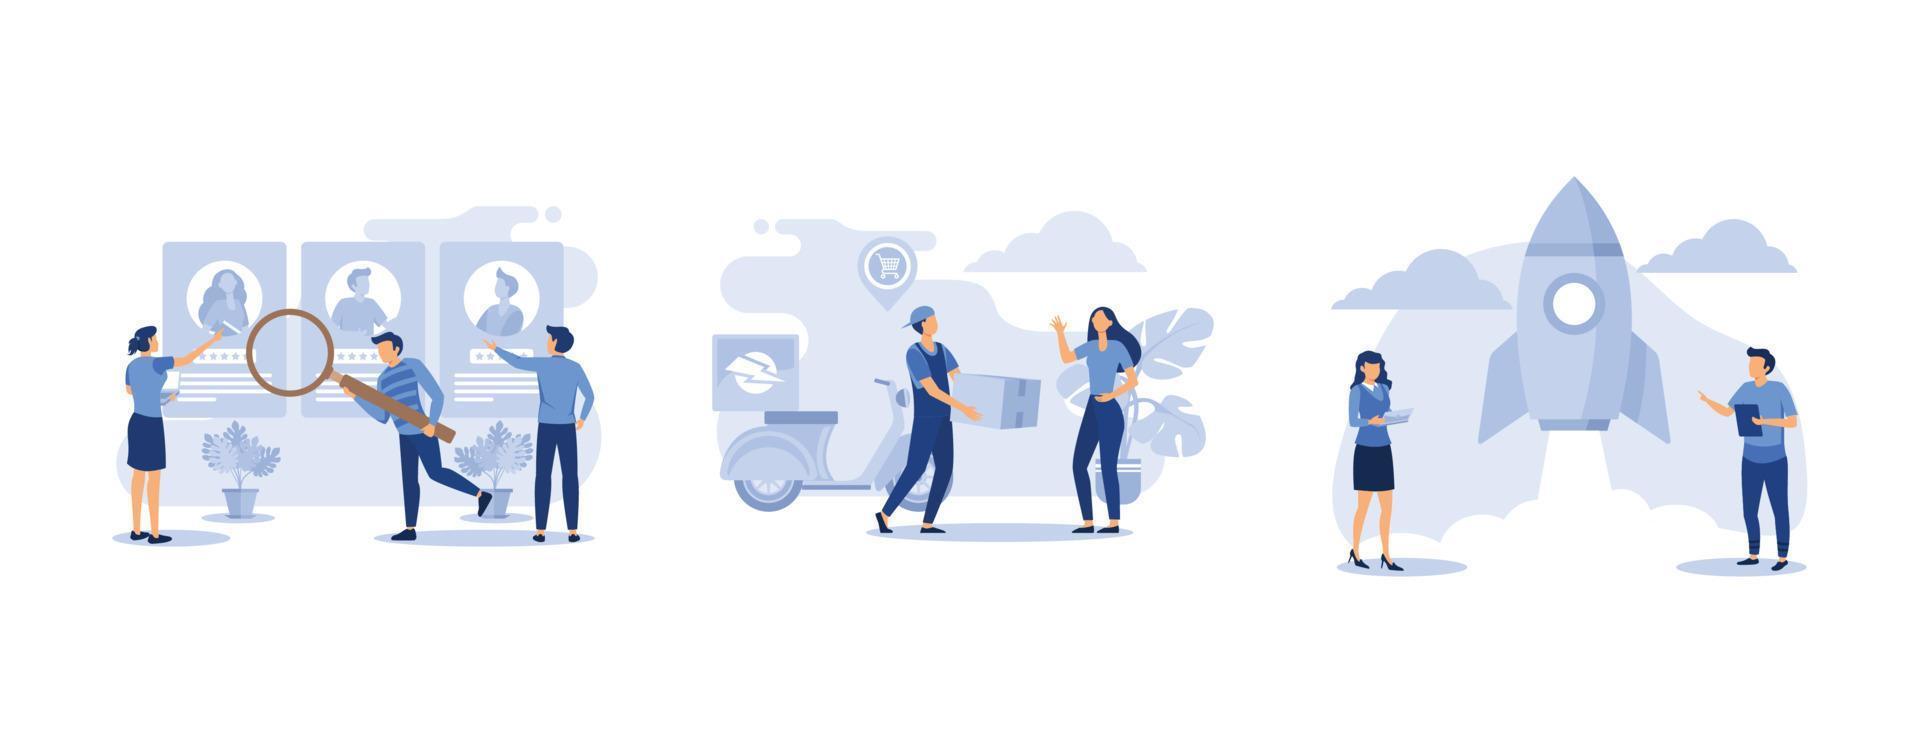 hiring employees, online shopping, cohesive teamwork in the startup, set flat vector modern illustration